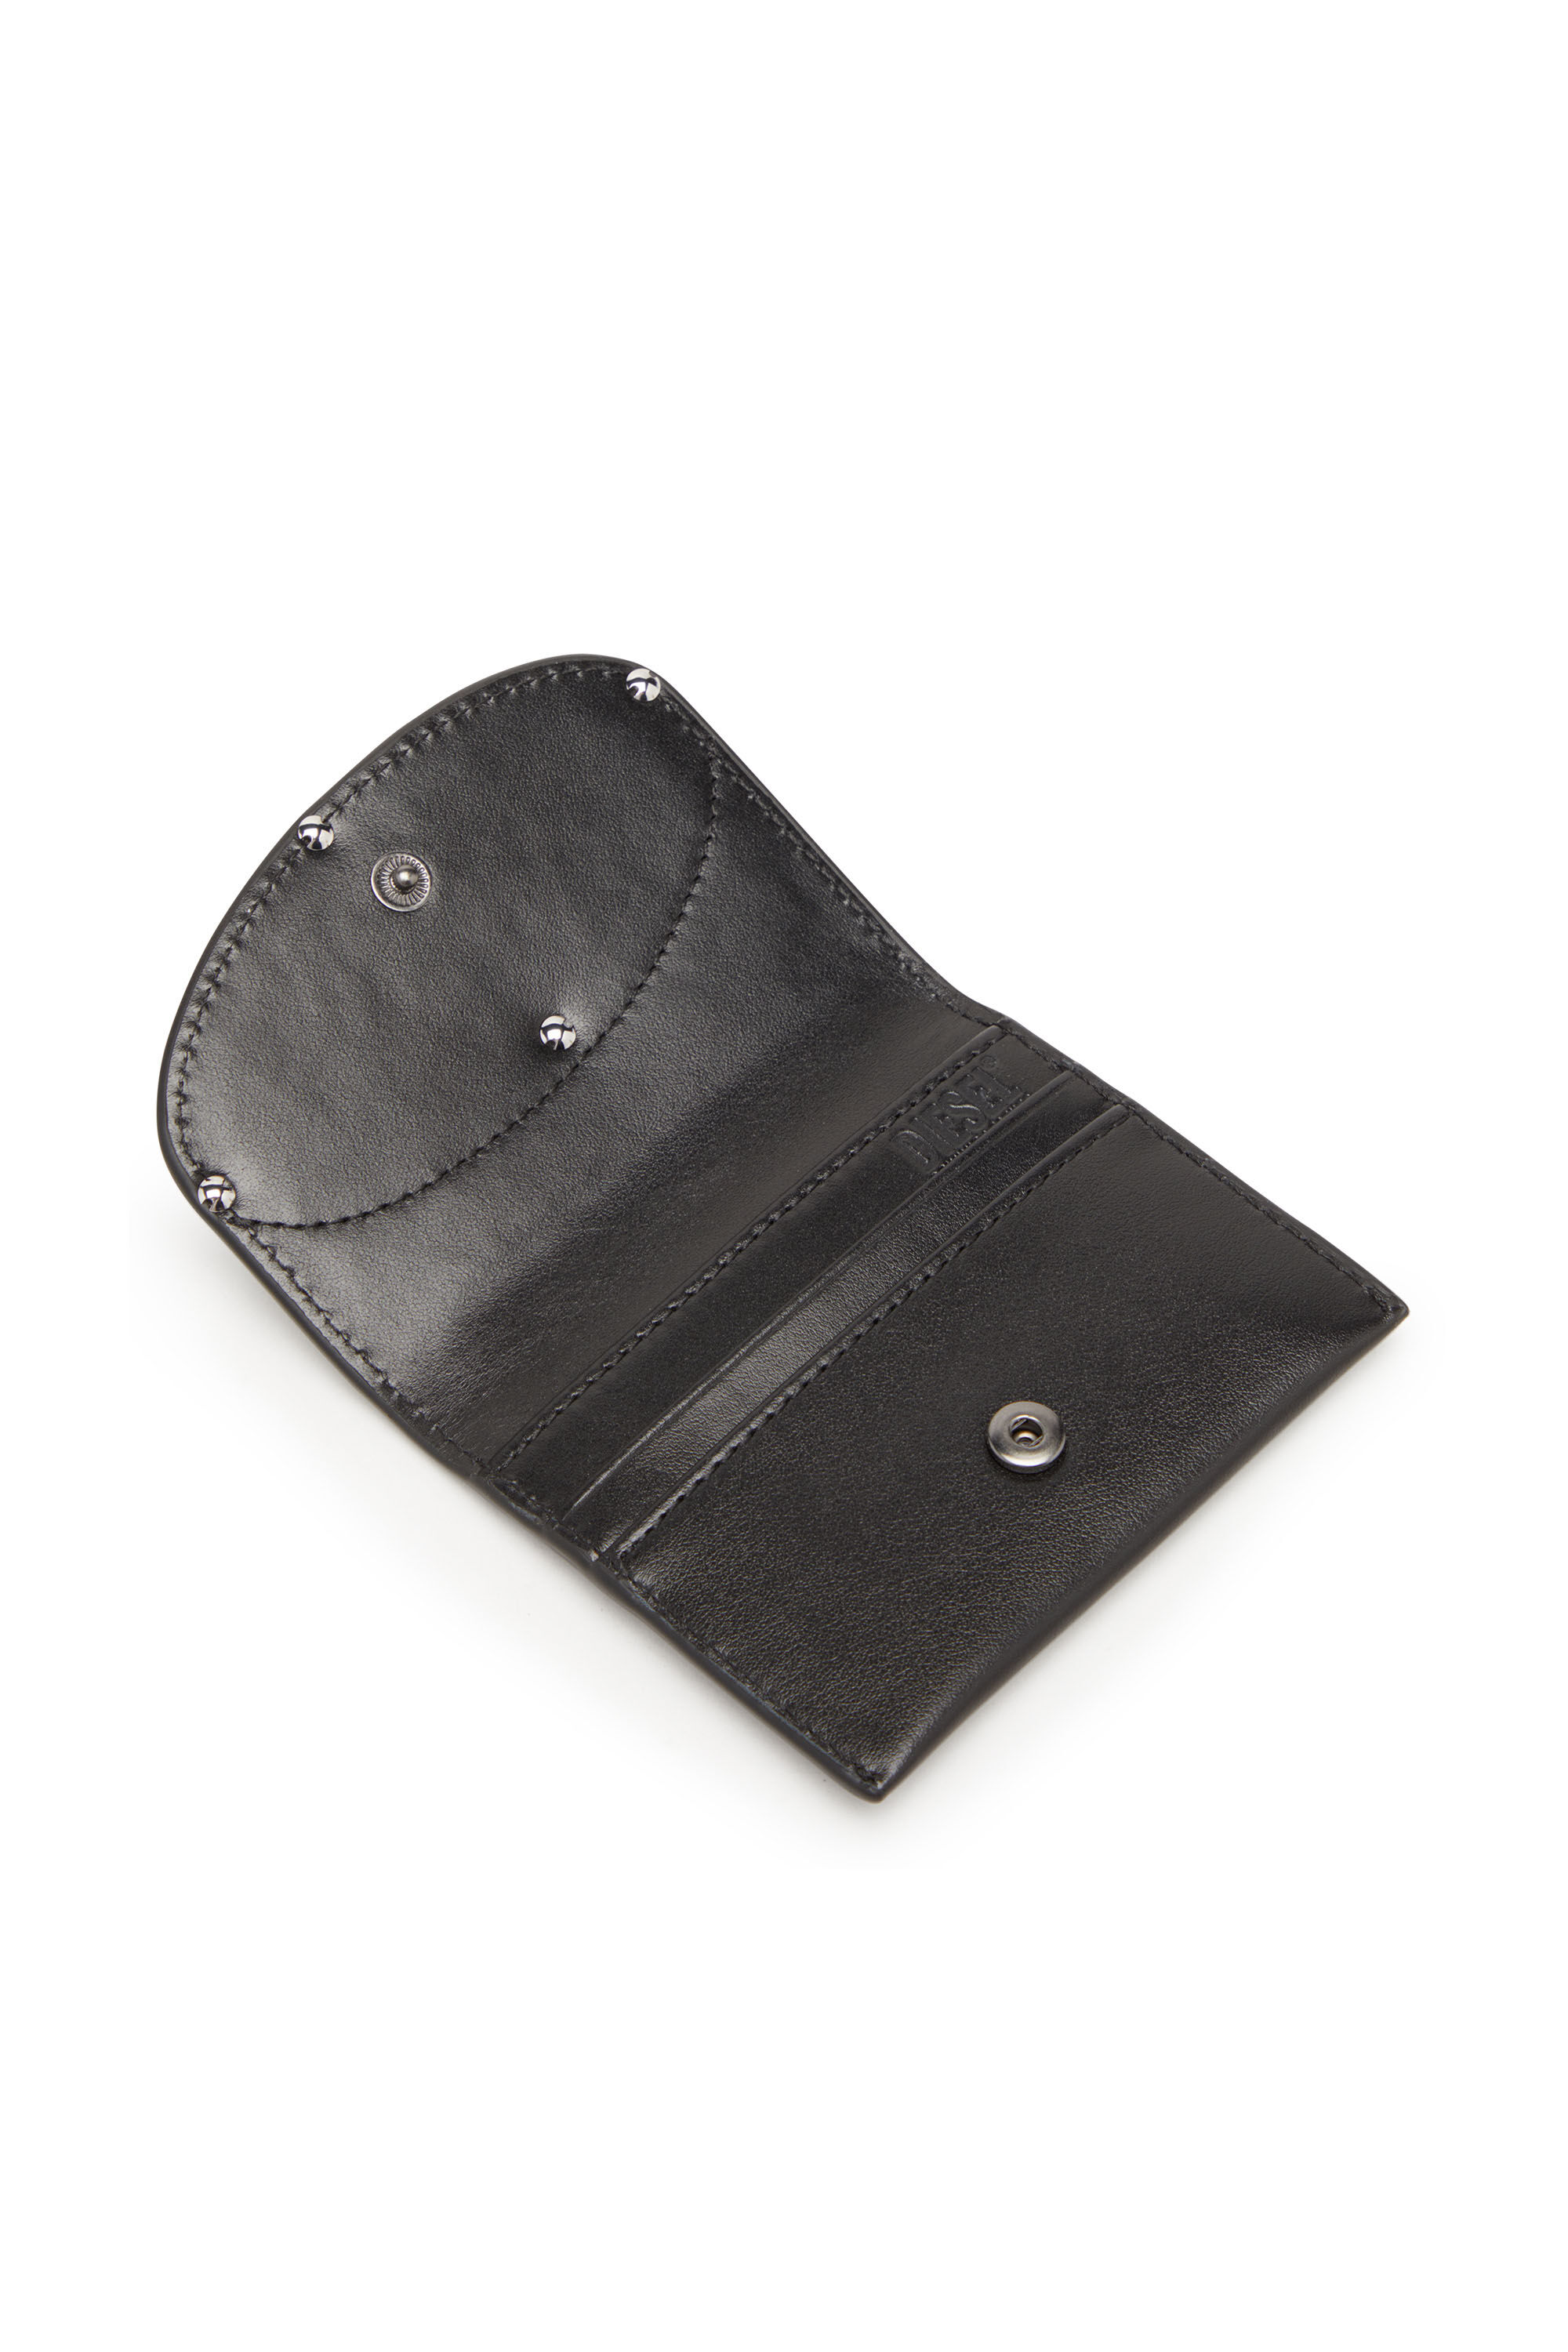 Diesel - HOLI-D CARD HOLDER S, Unisex Bi-fold card holder in smooth leather in ブラック - Image 3